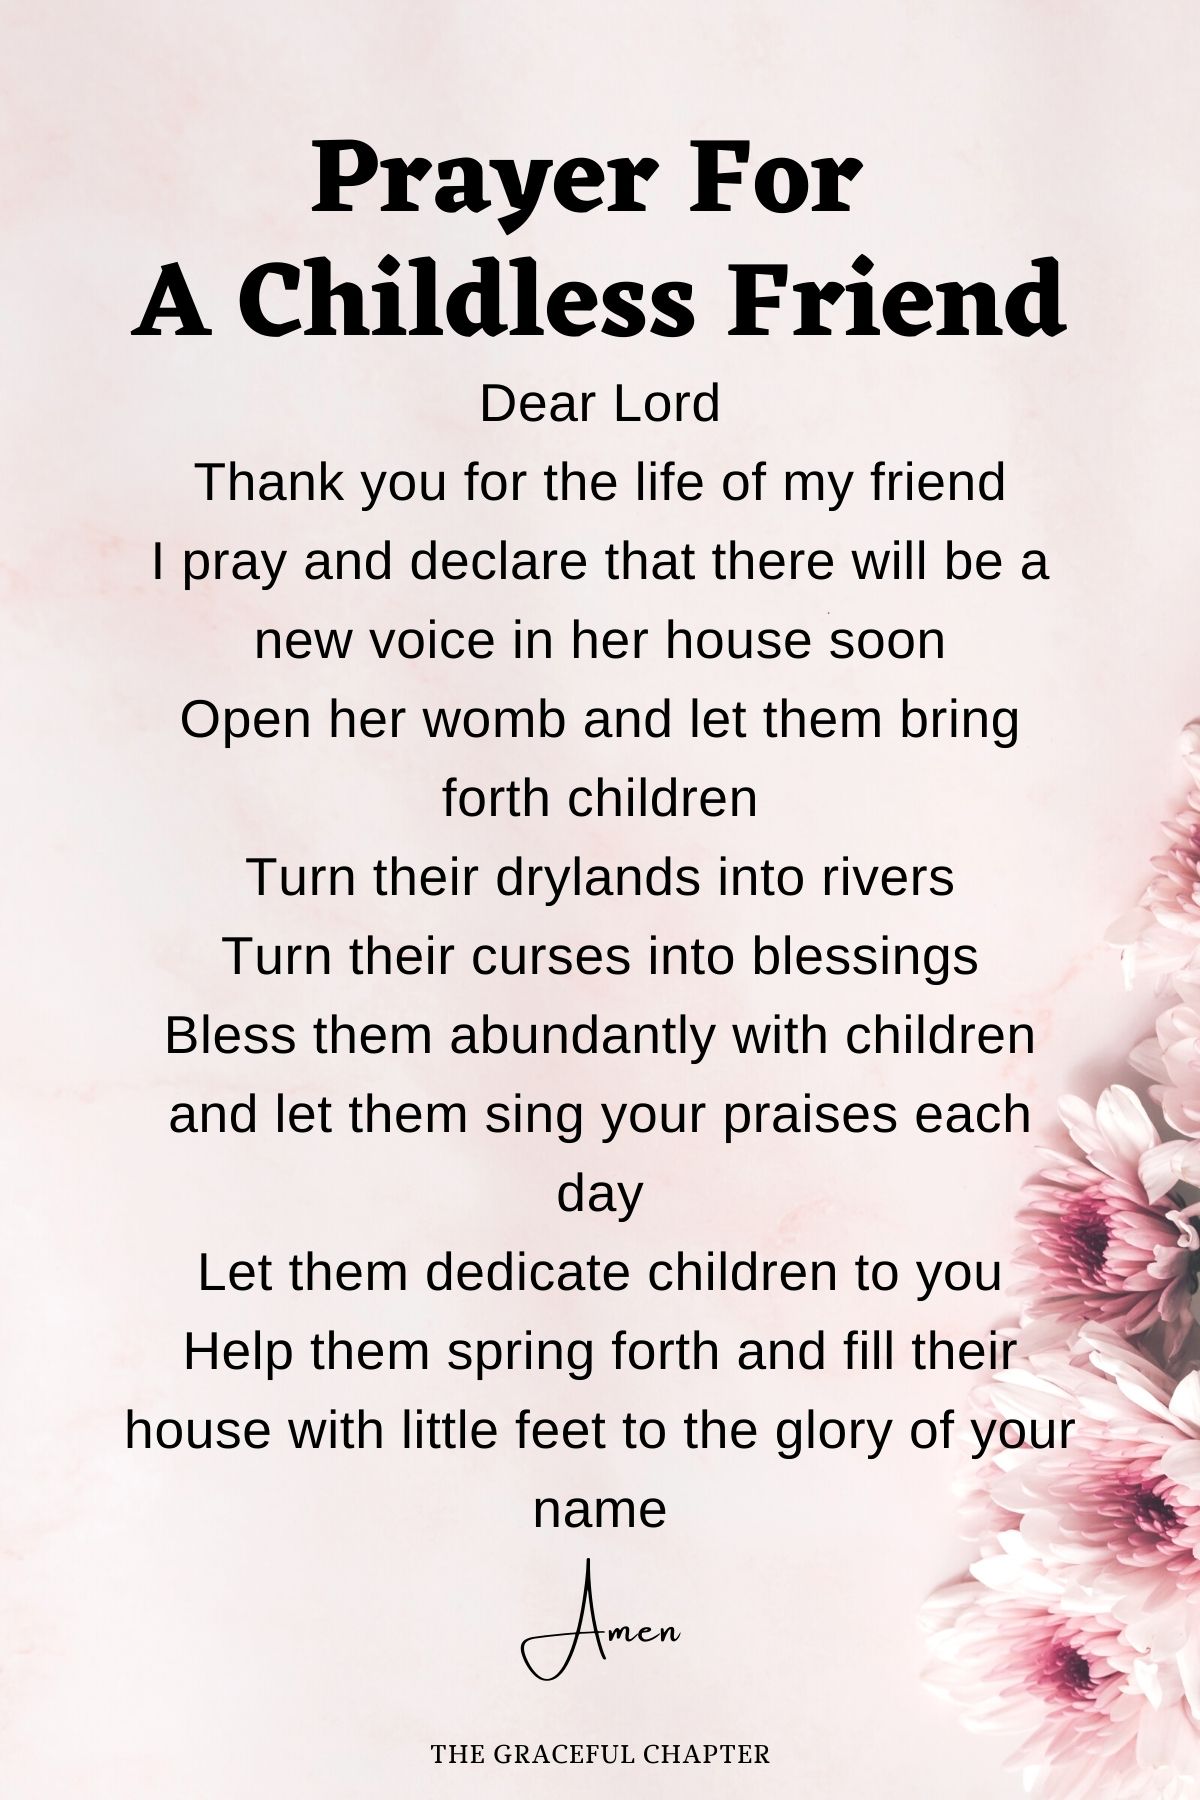 Prayer for a childless friend